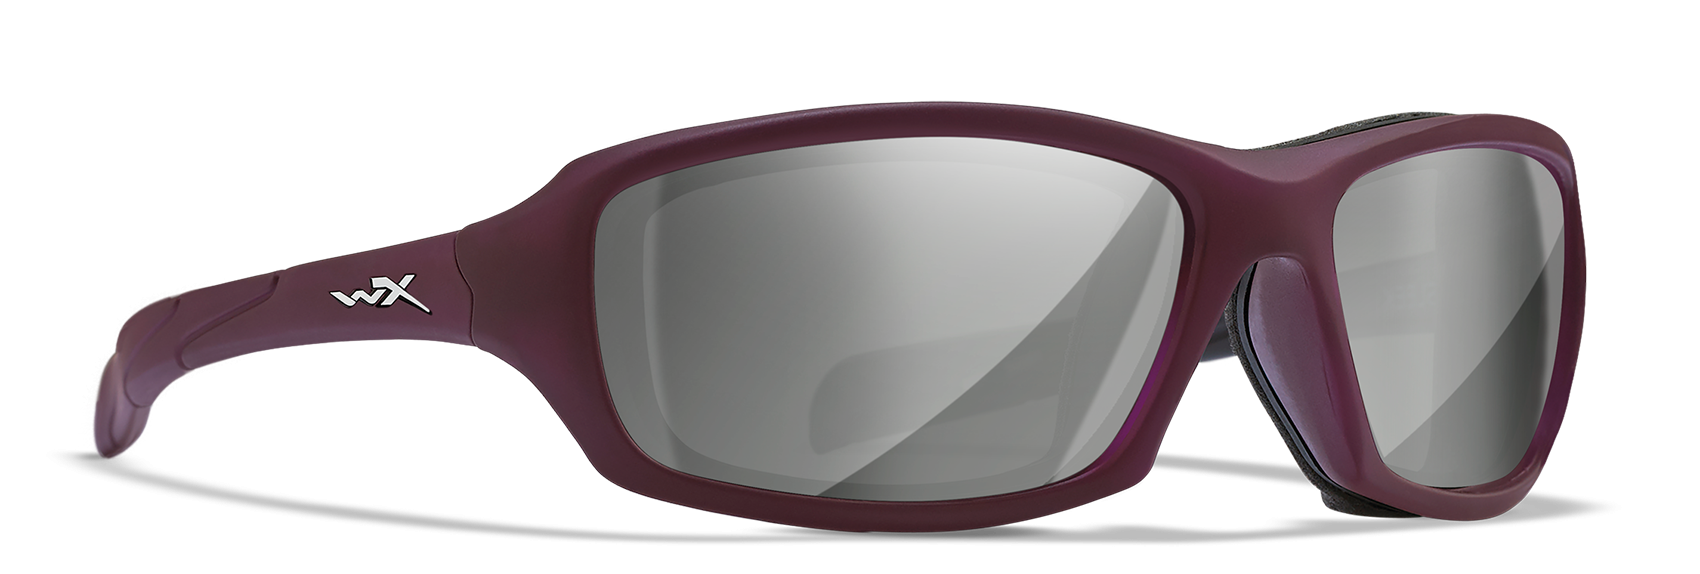 Wiley X WX Sleek Matte Violet Polycarbonate Sunglasses